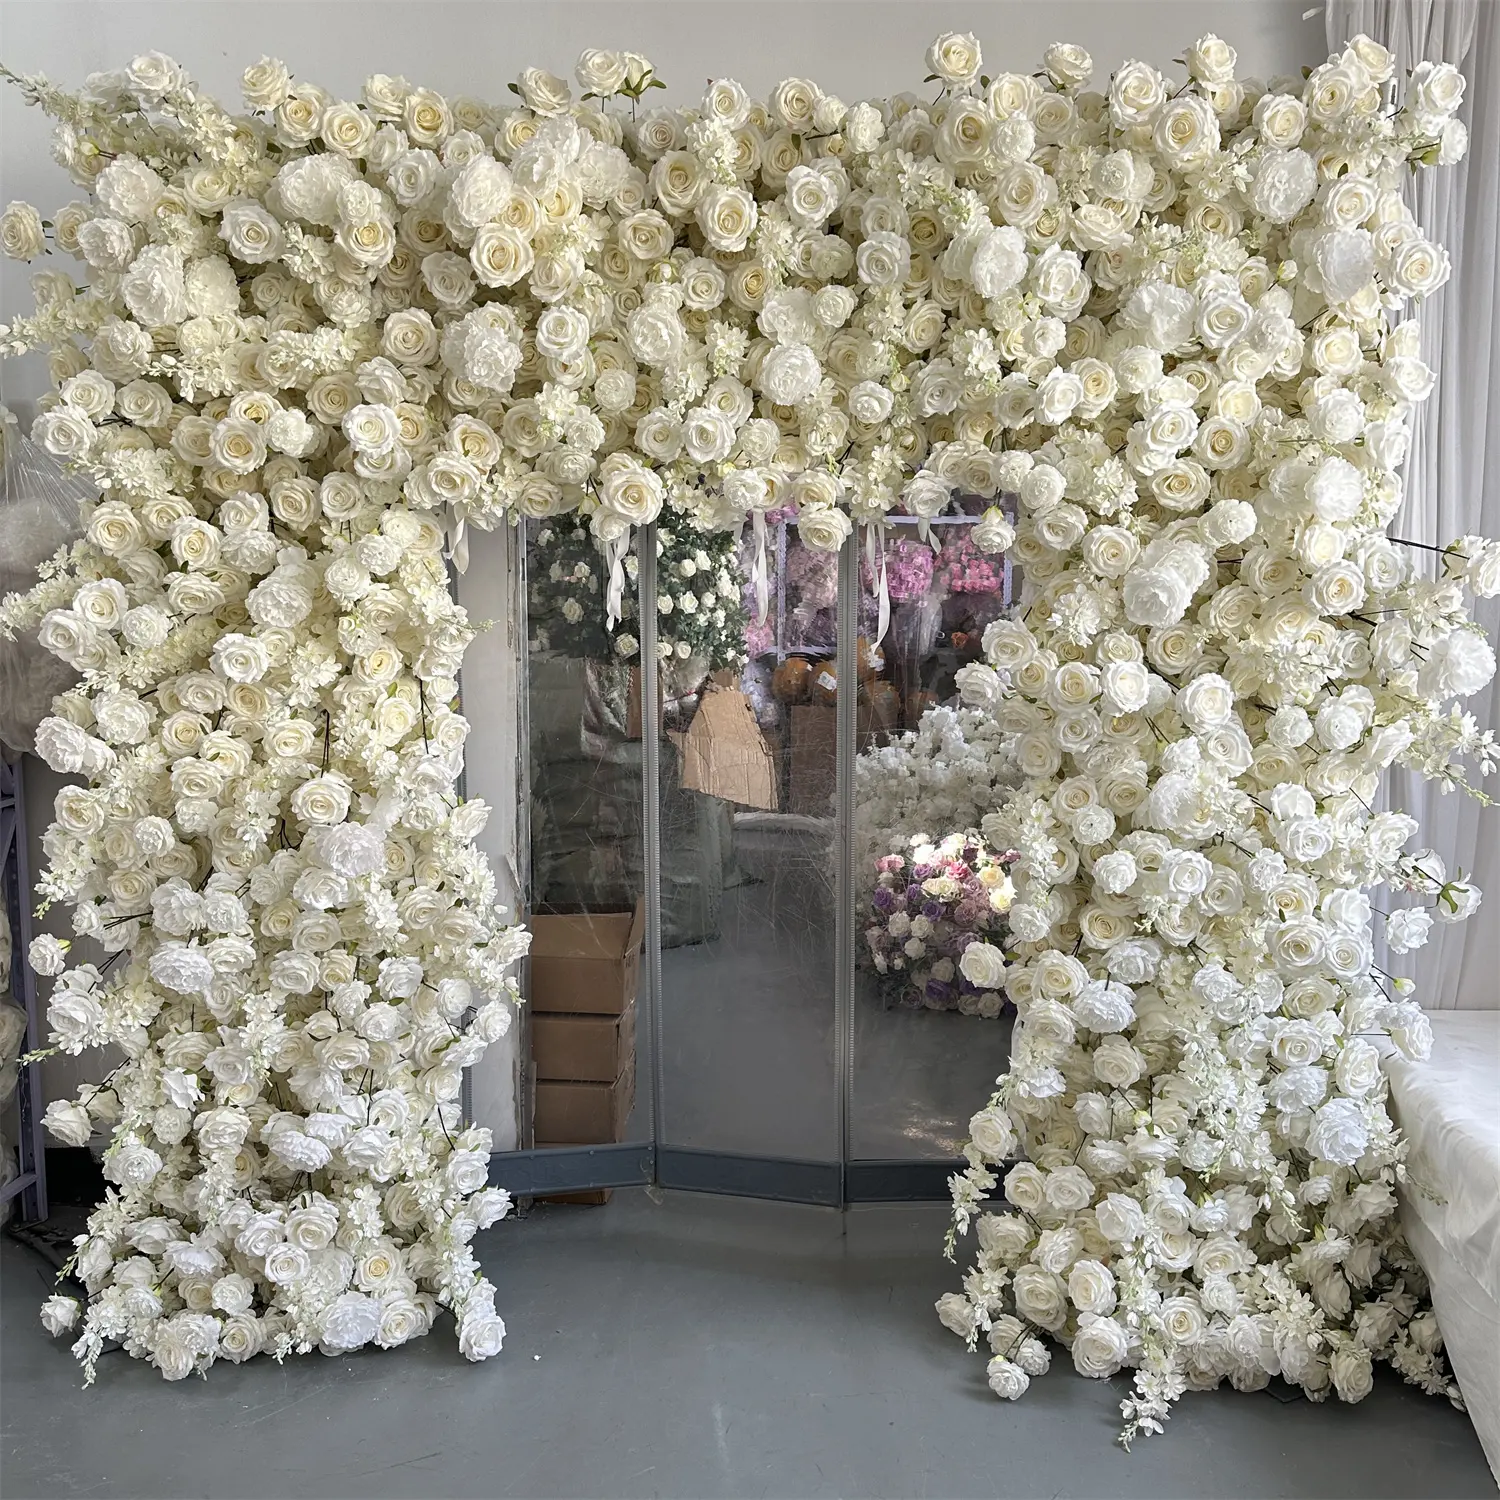 IFG grosir panel bunga Gulung Ke atas pernikahan gading, ukuran 2.5M x 2.5M lengkungan bunga dinding